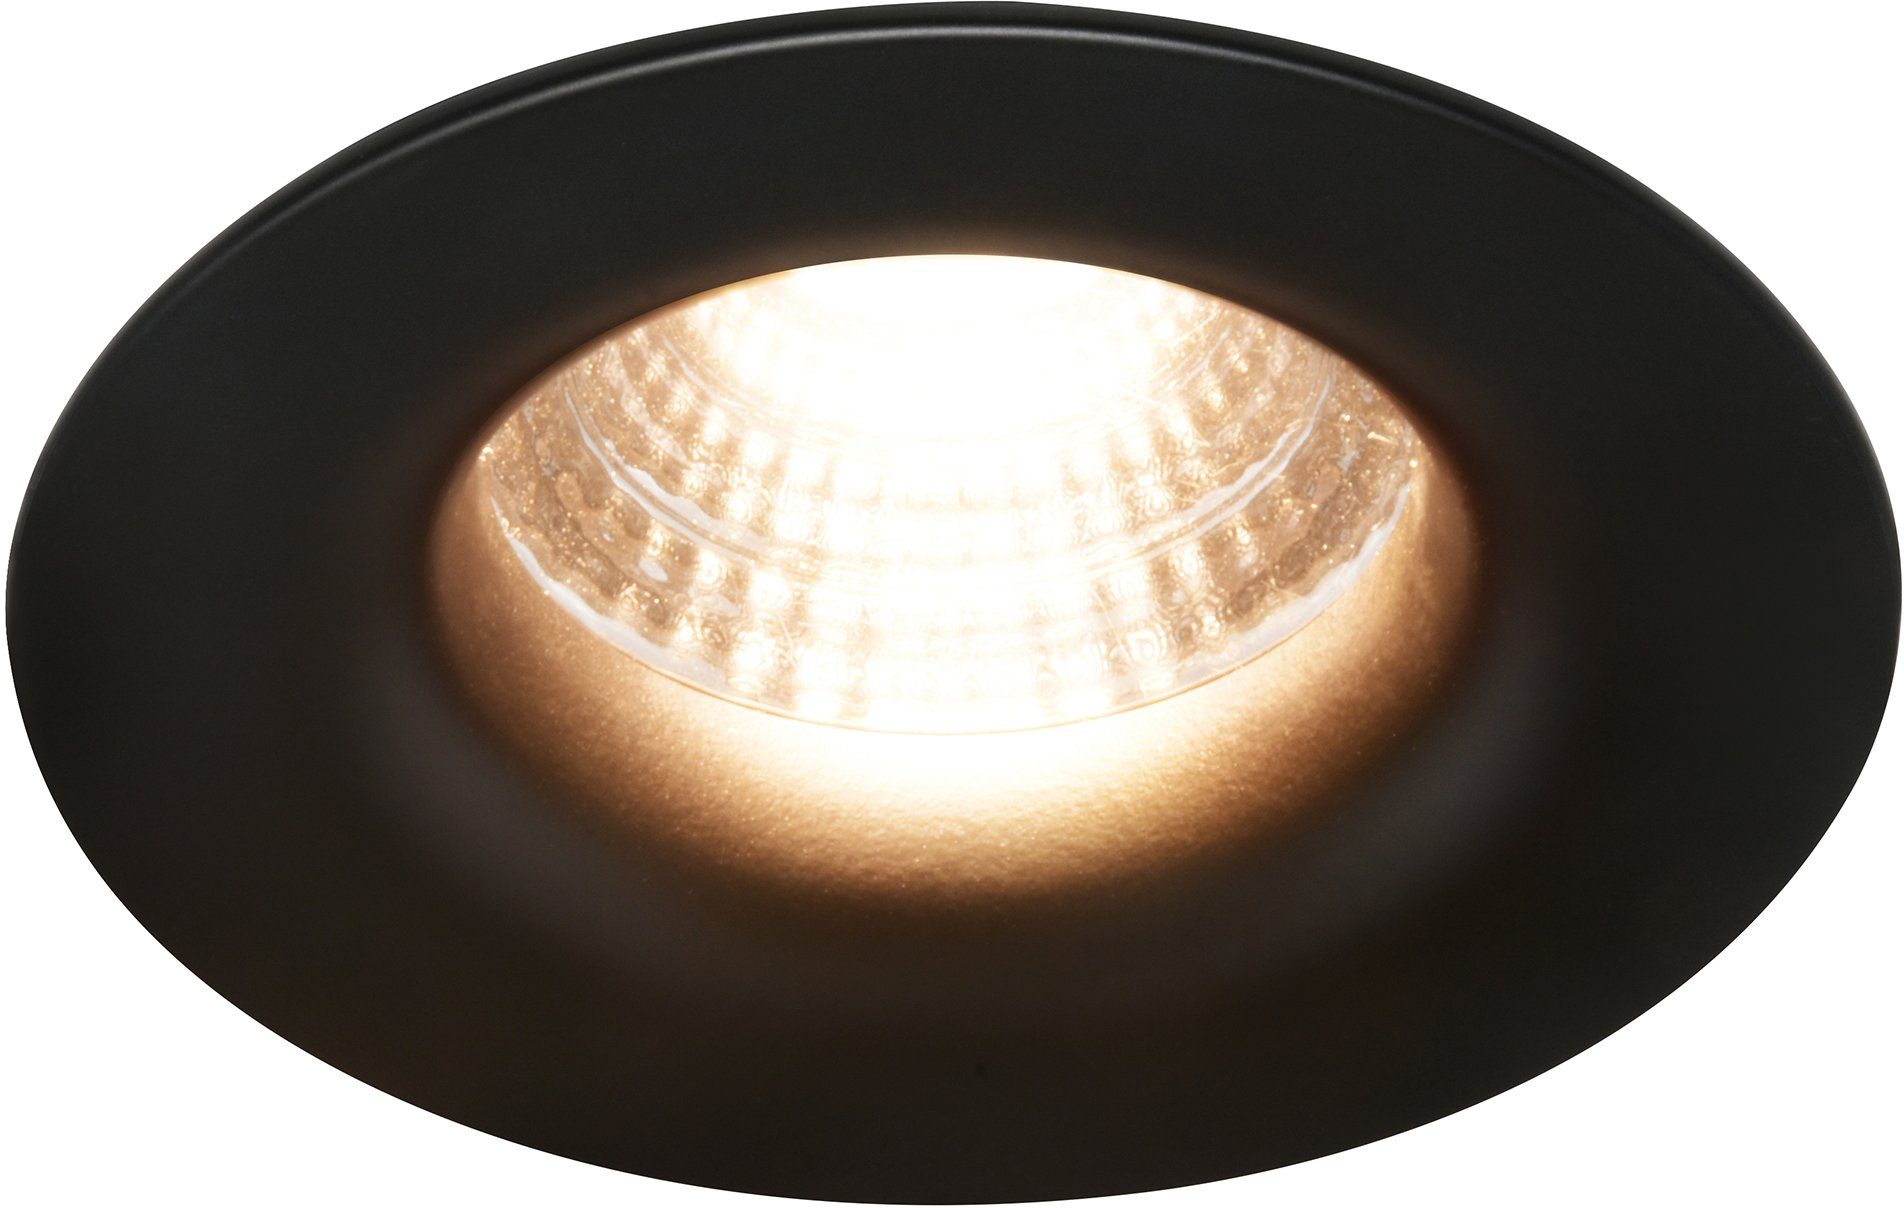 Nordlux Deckenstrahler Starke, LED fest integriert, Warmweiß, inkl. 6,1W LED,  450 Lumen, Dimmbar, inkl. 6,1W 450 Lumen LED Modul integriert